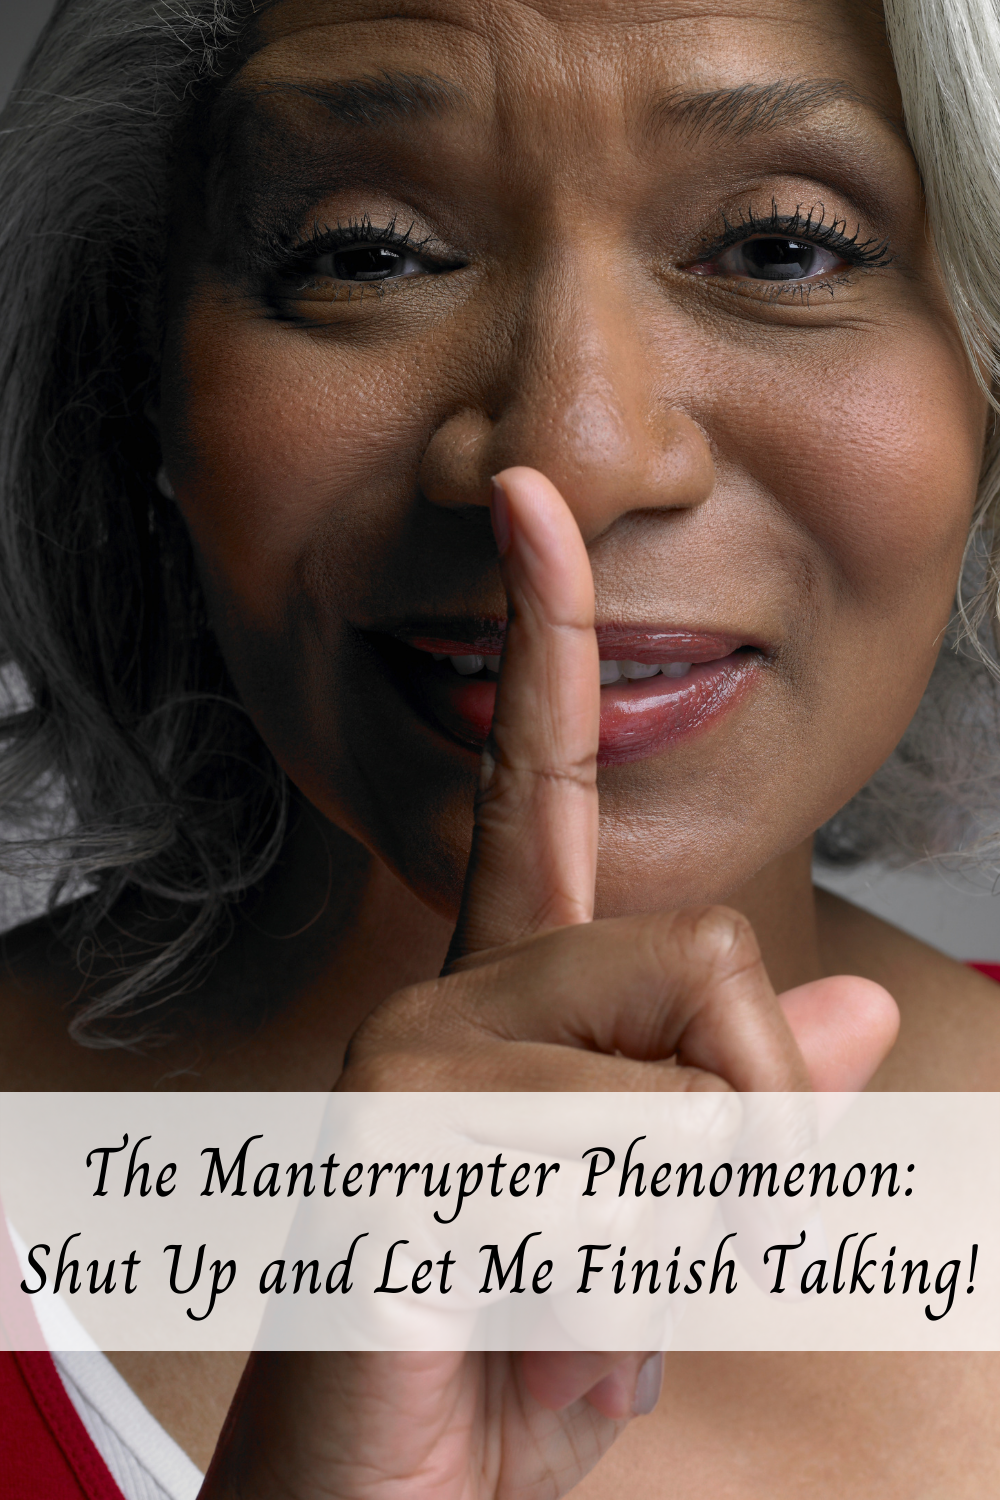 The Manterrupter Phenomenon: Shut Up and Let Me Finish Talking!